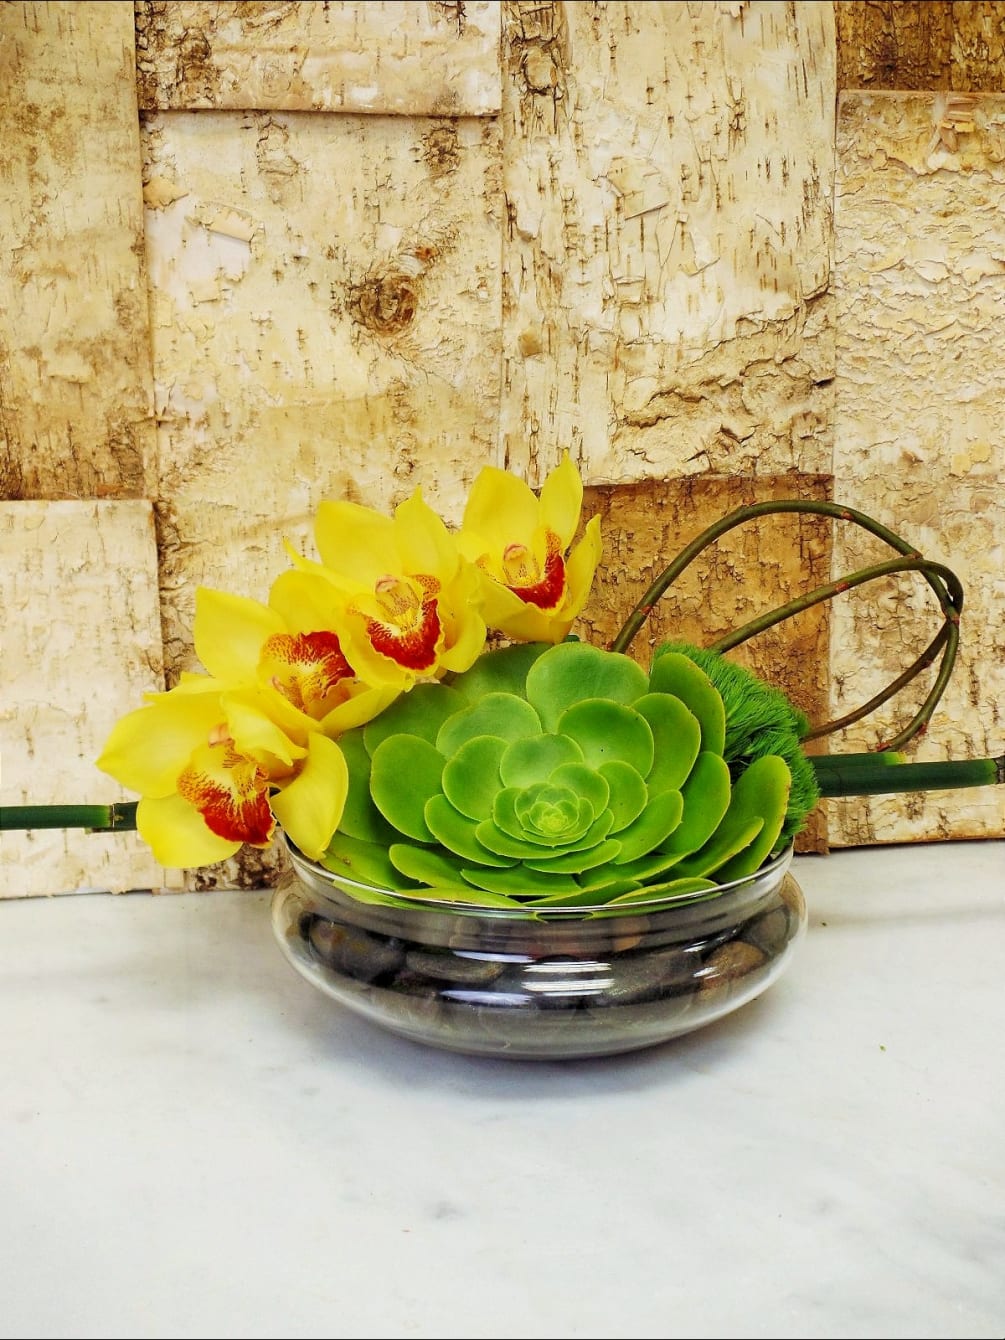 Succulent dish with river stones and beautiful yellow cymbidium .